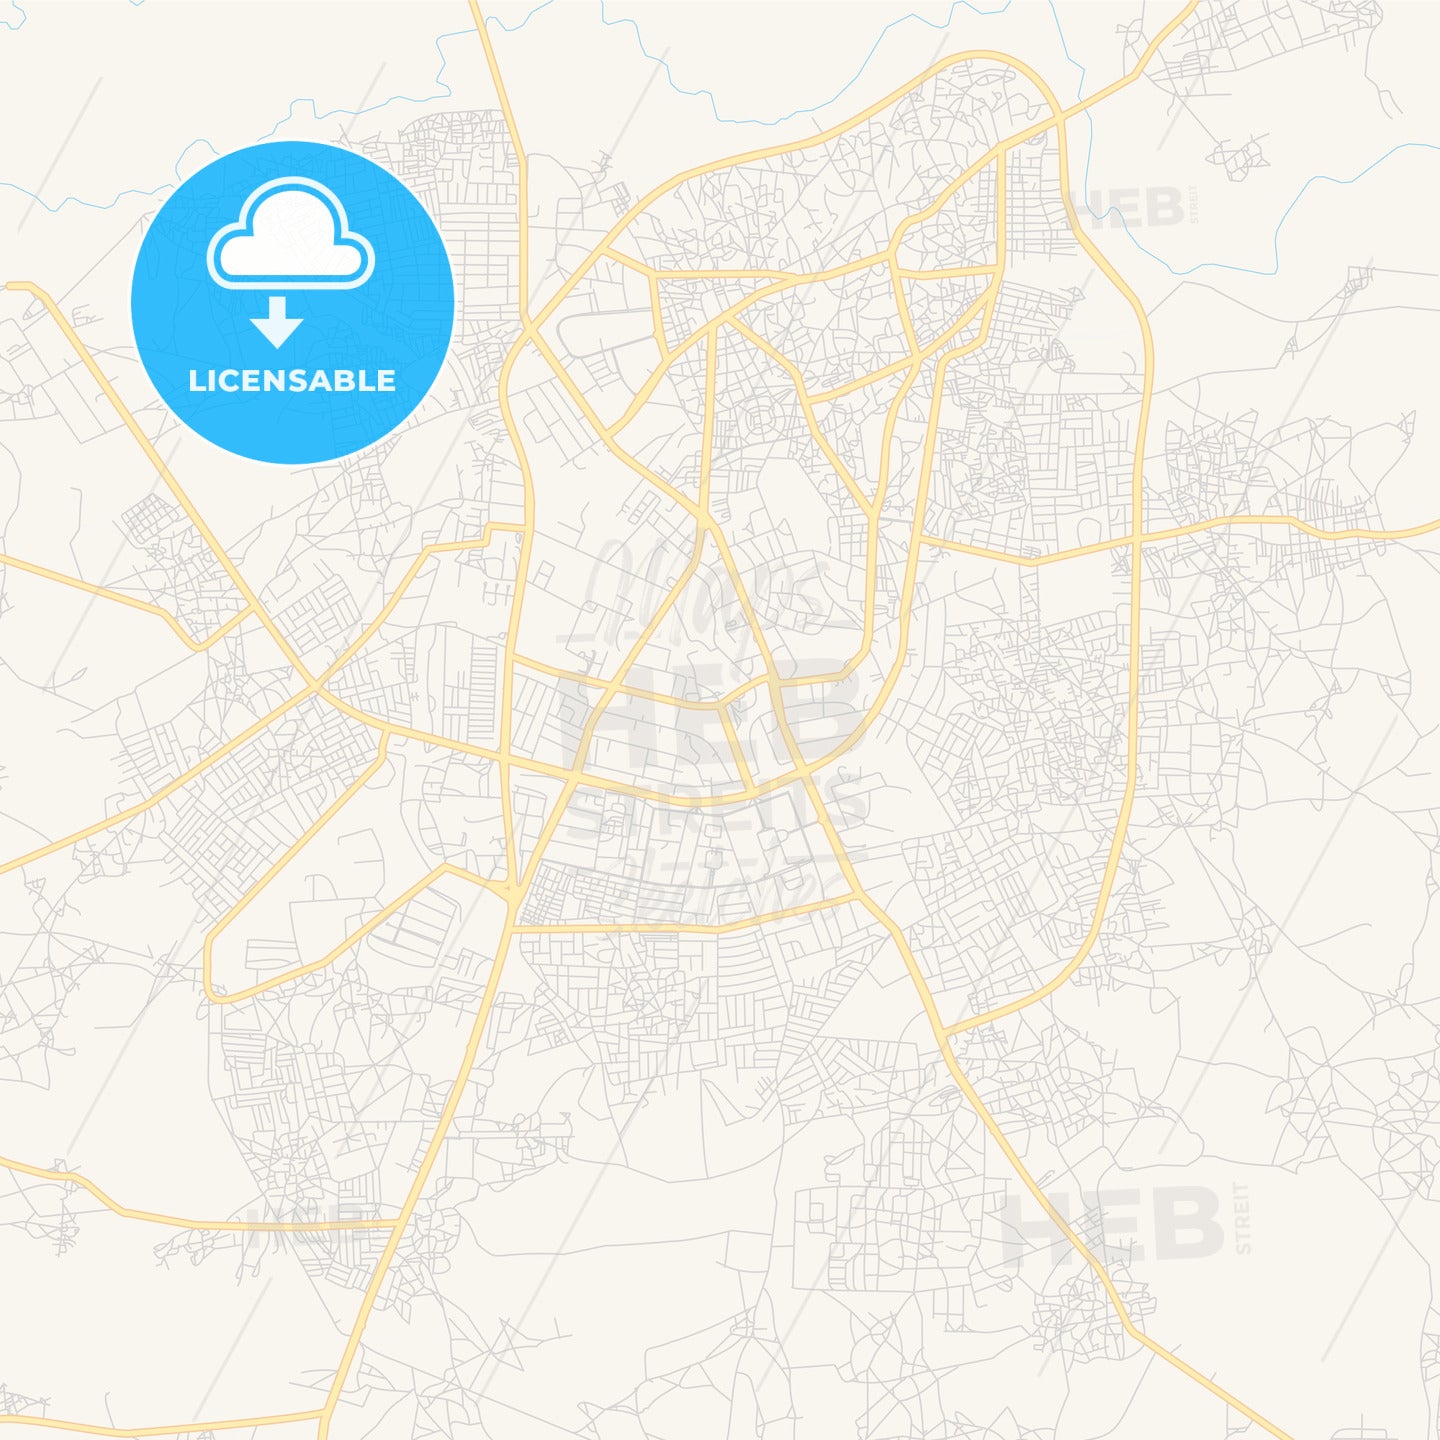 Printable street map of Sokoto, Nigeria